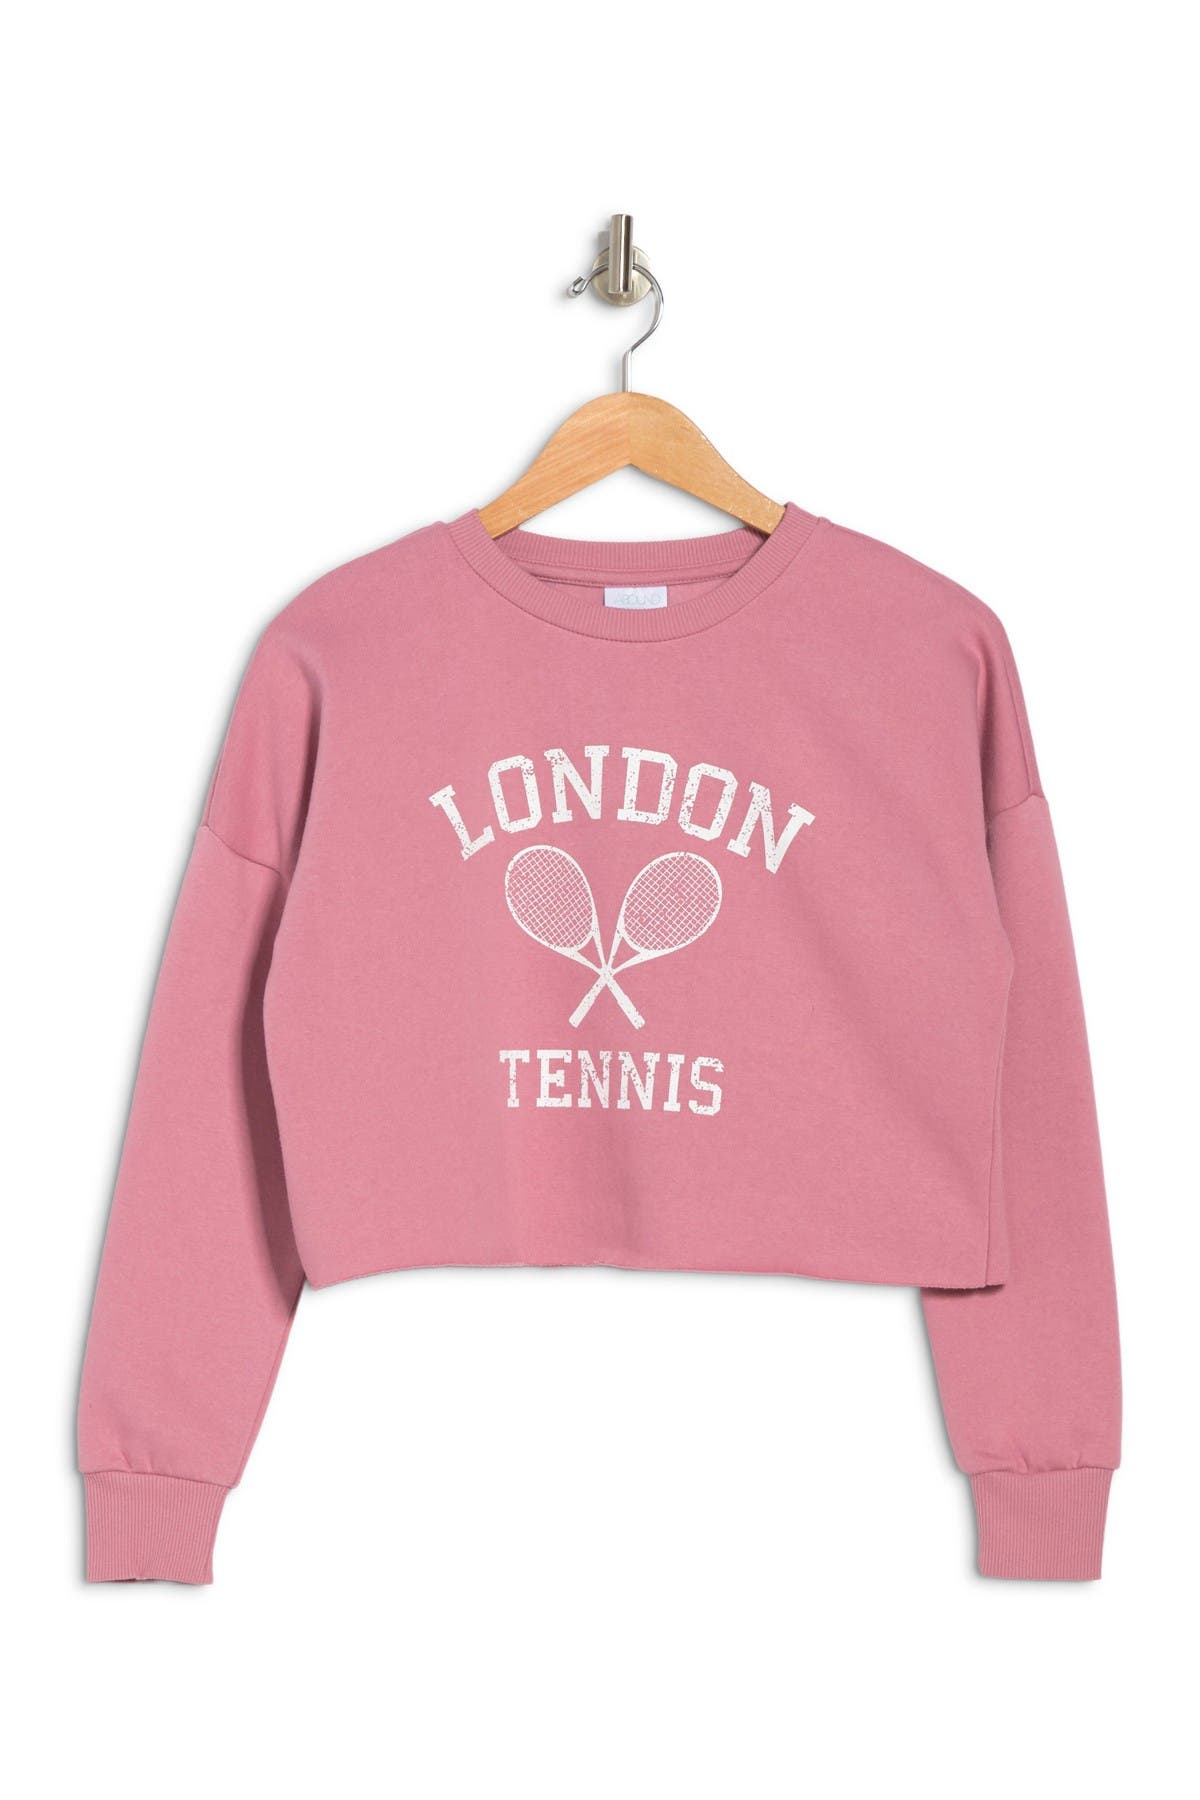 Abound Cropped Graphic Pullover Sweatshirt In Pink Foxglove London